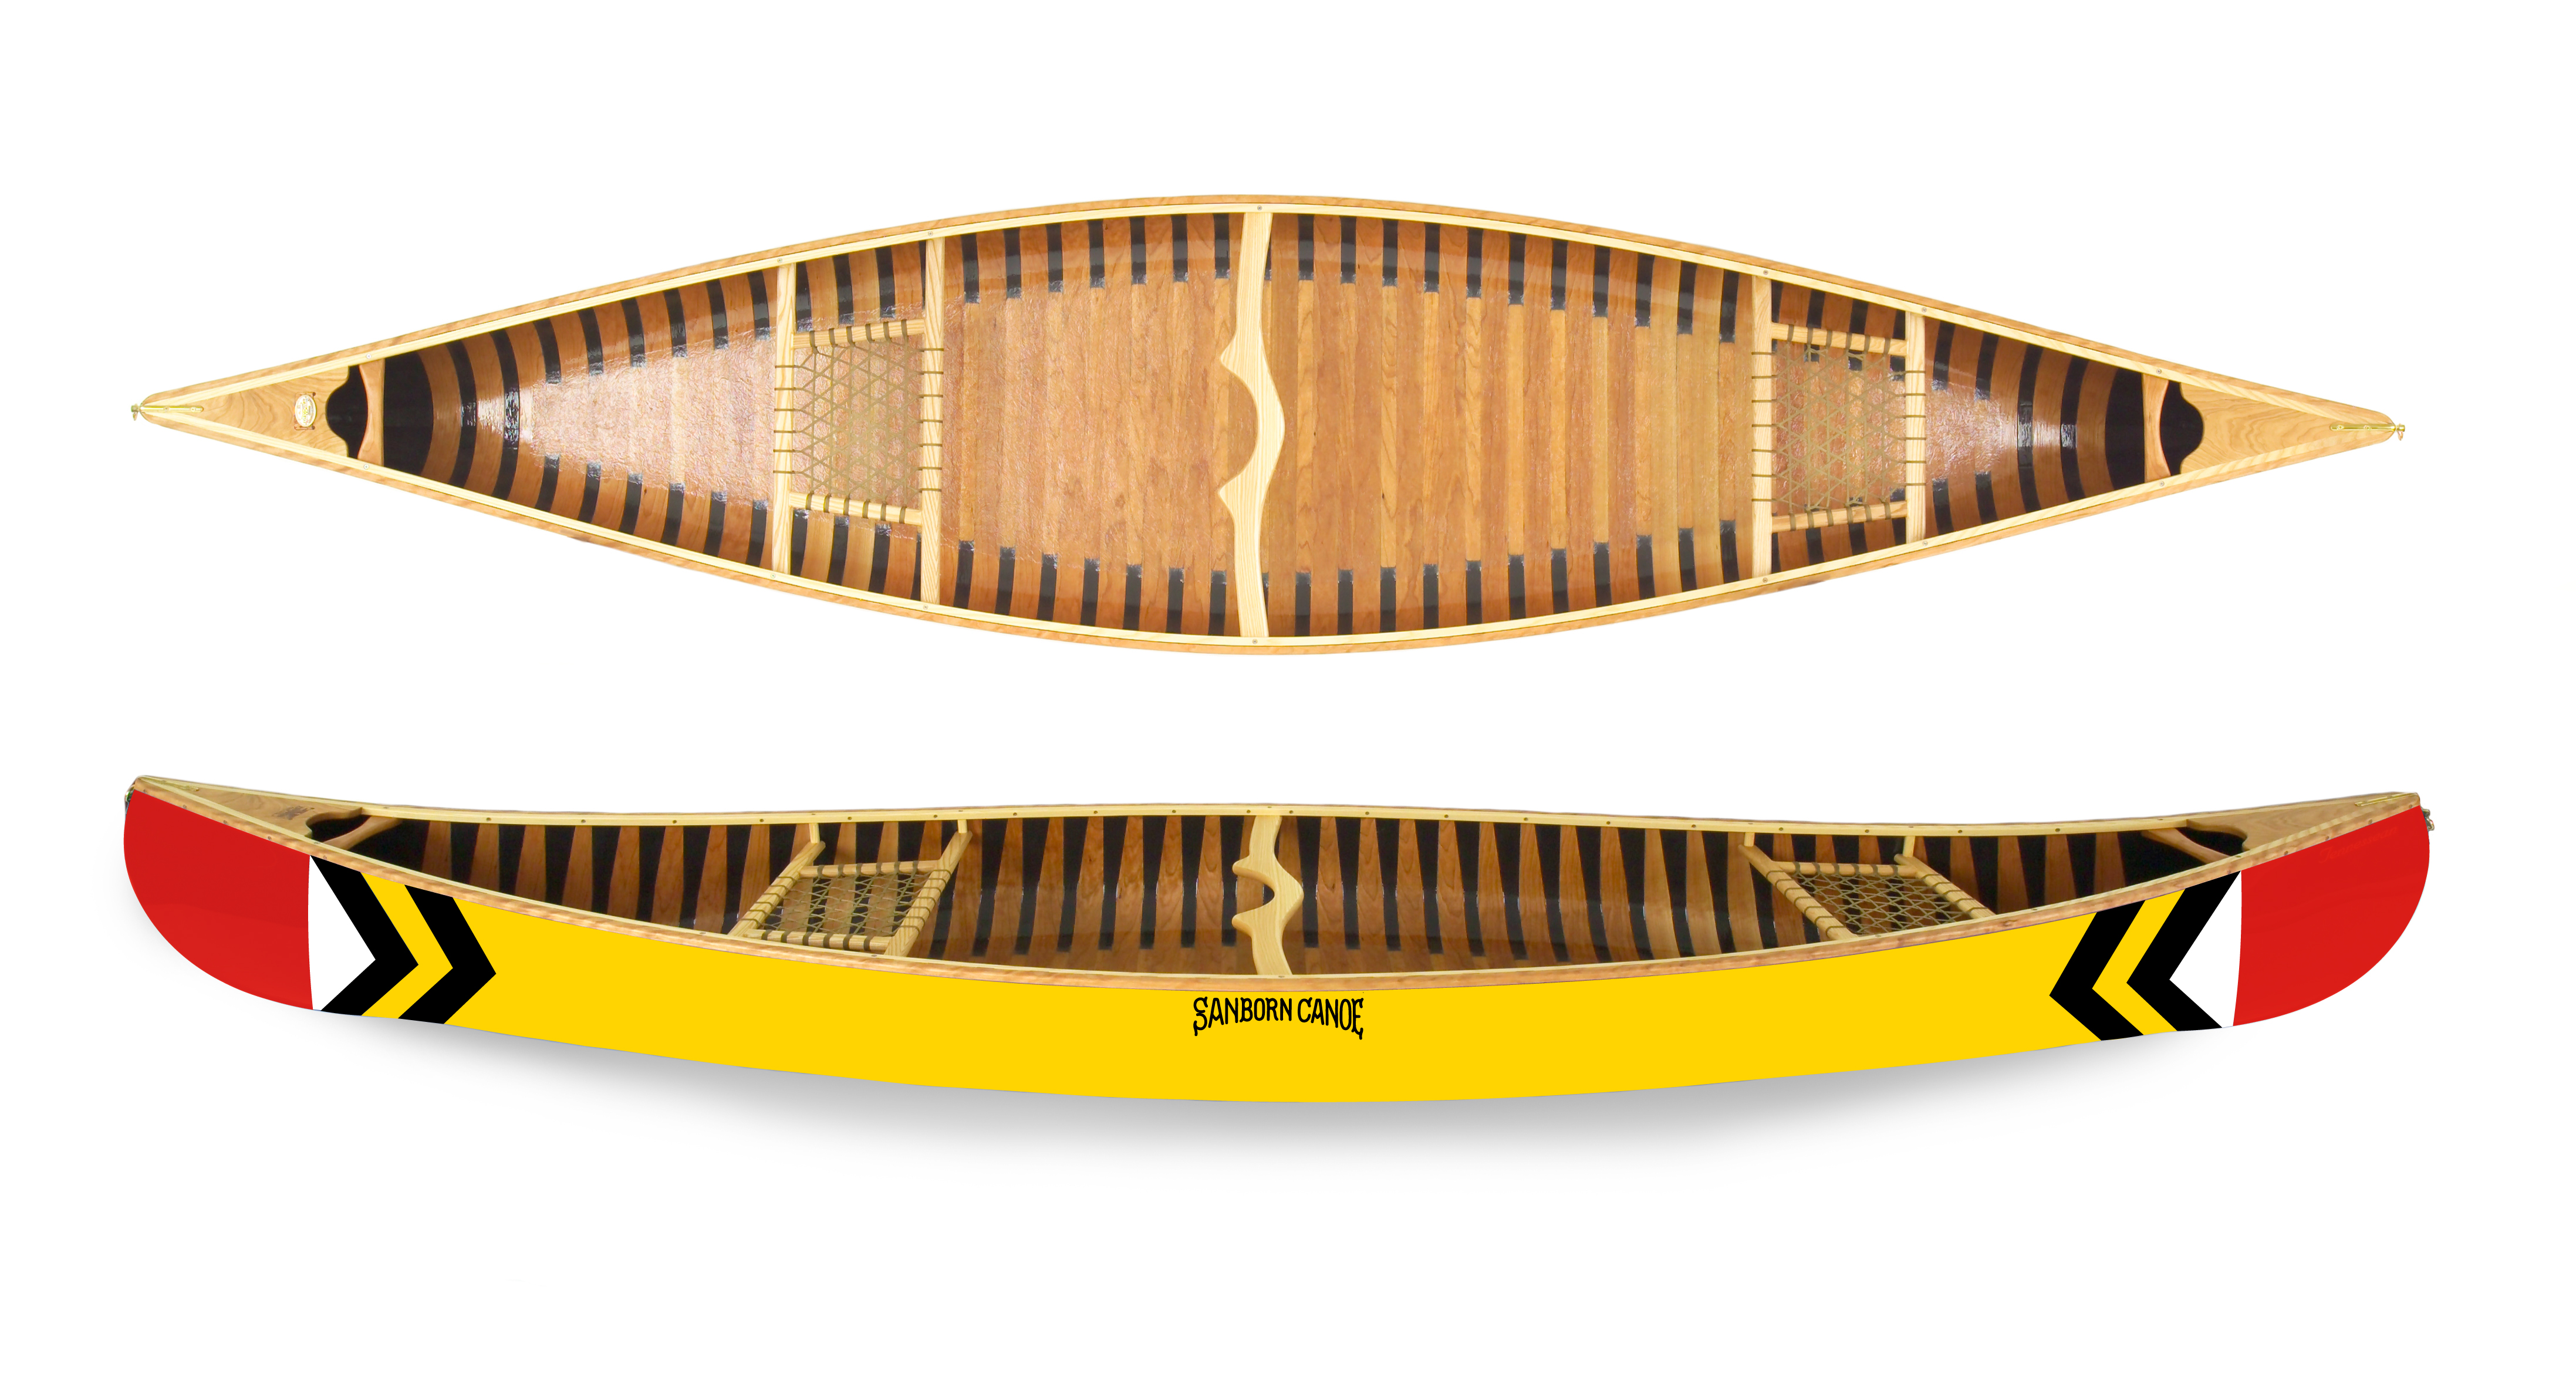 Canoes: Gregory John - Sanborn Classic by Sanborn Canoe Co. - Image 2348